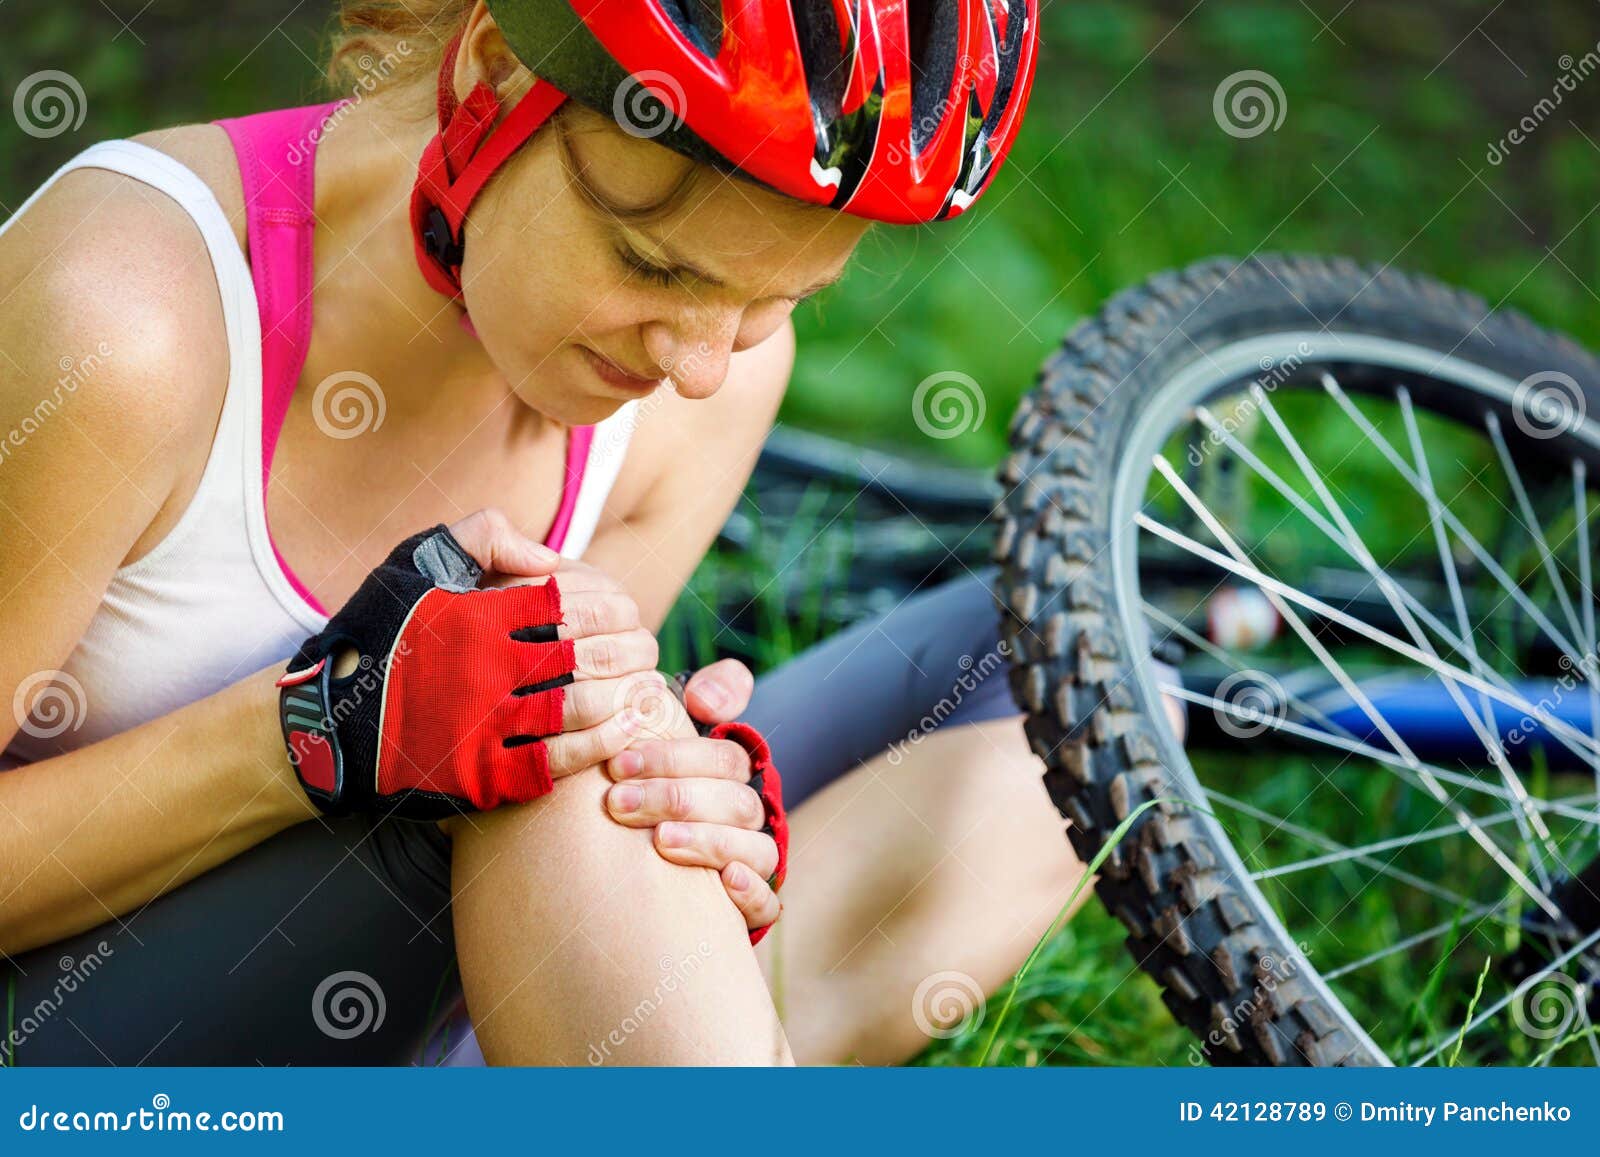 woman fell off mountain bike.